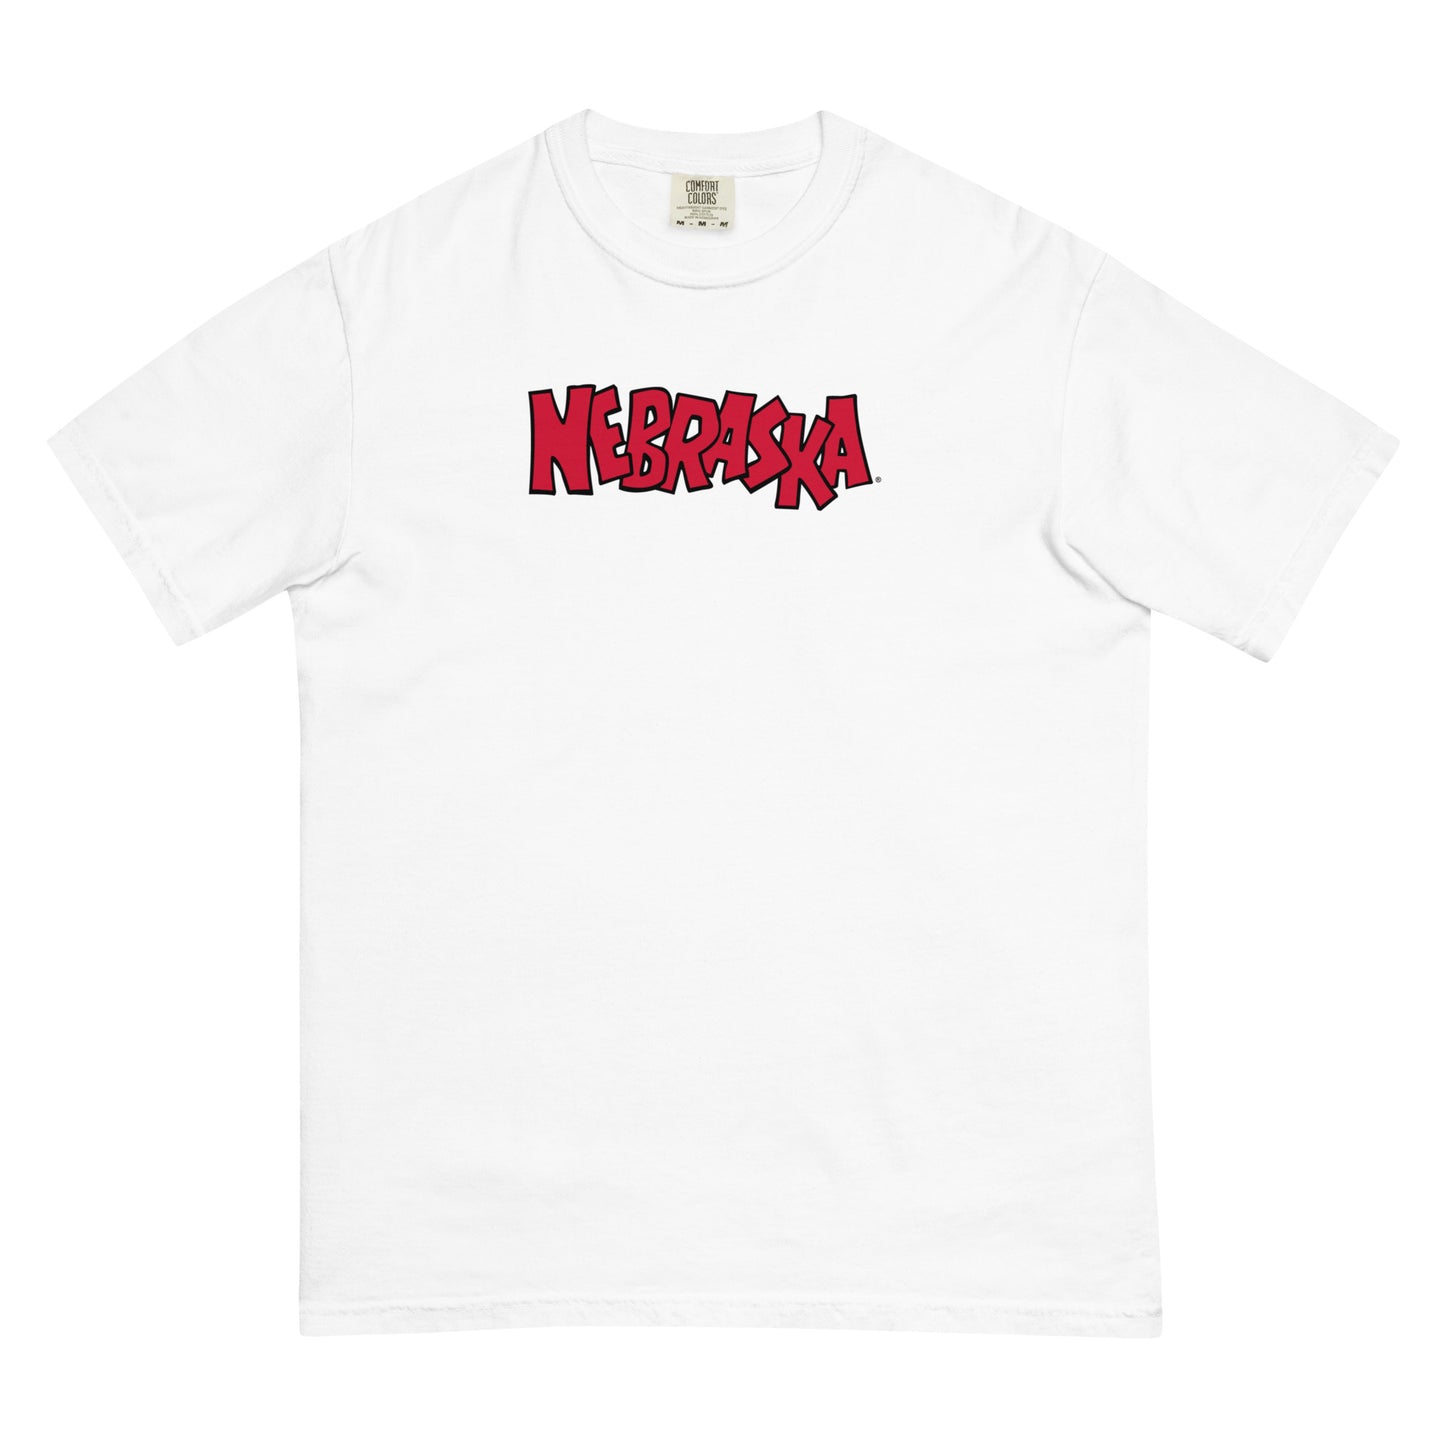 THE Nebraska Retro T-shirt